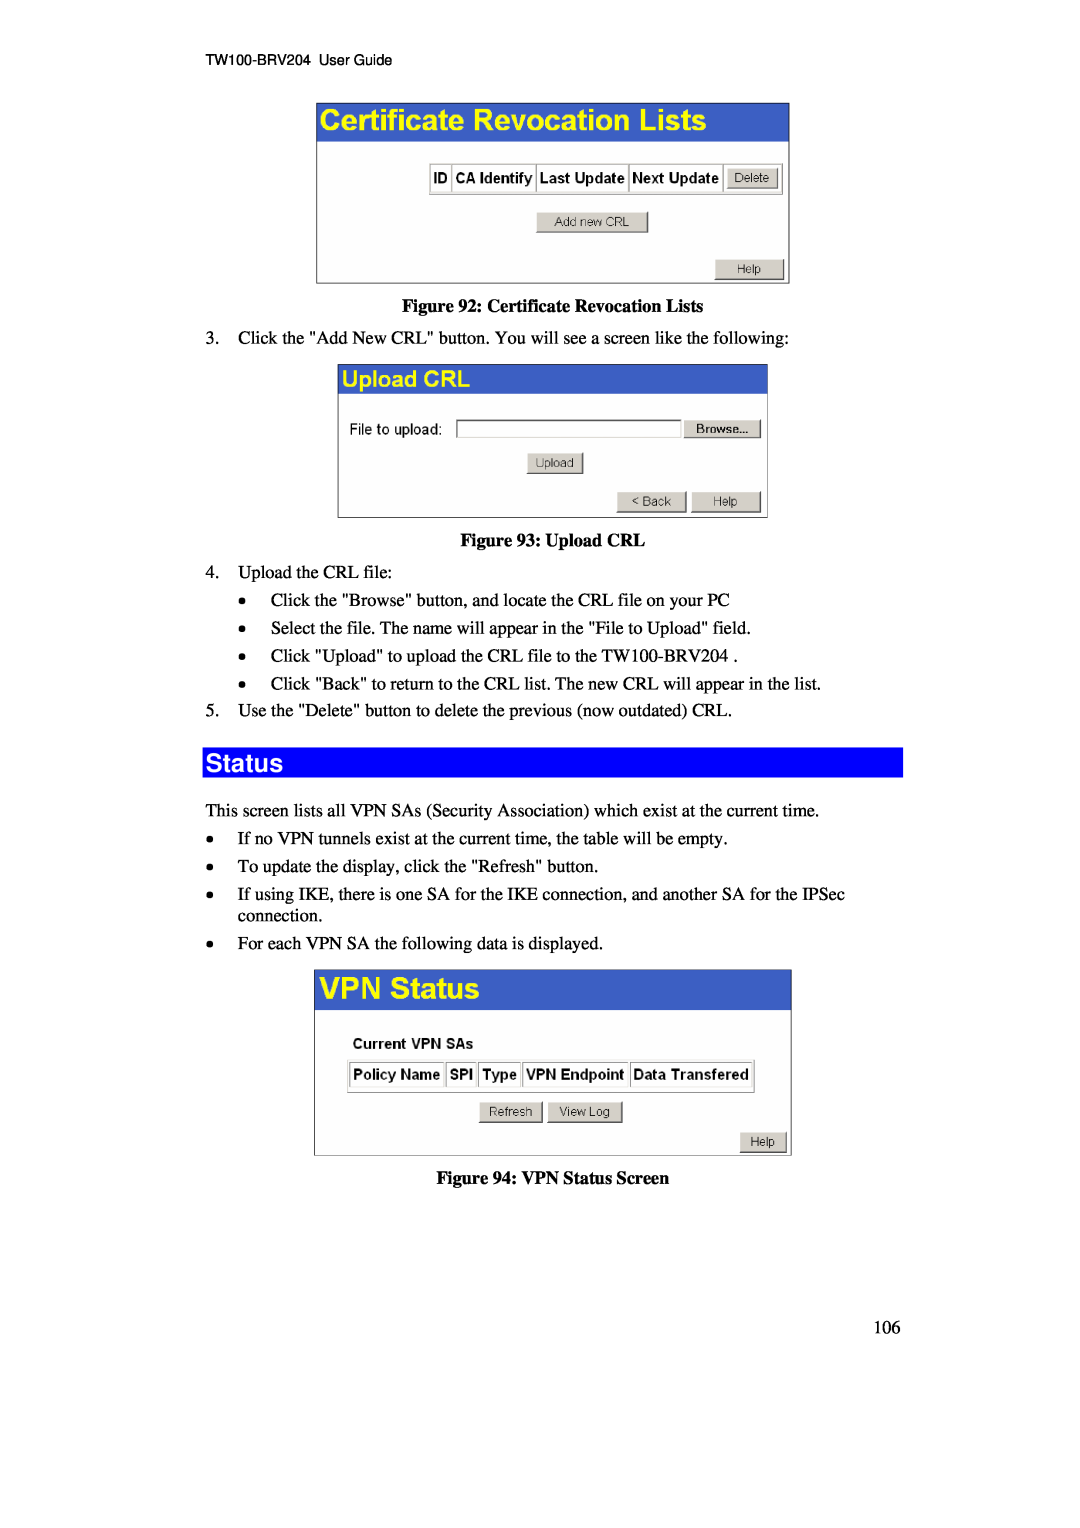 TRENDnet BRV204 manual Certificate Revocation Lists, Upload CRL, VPN Status Screen 